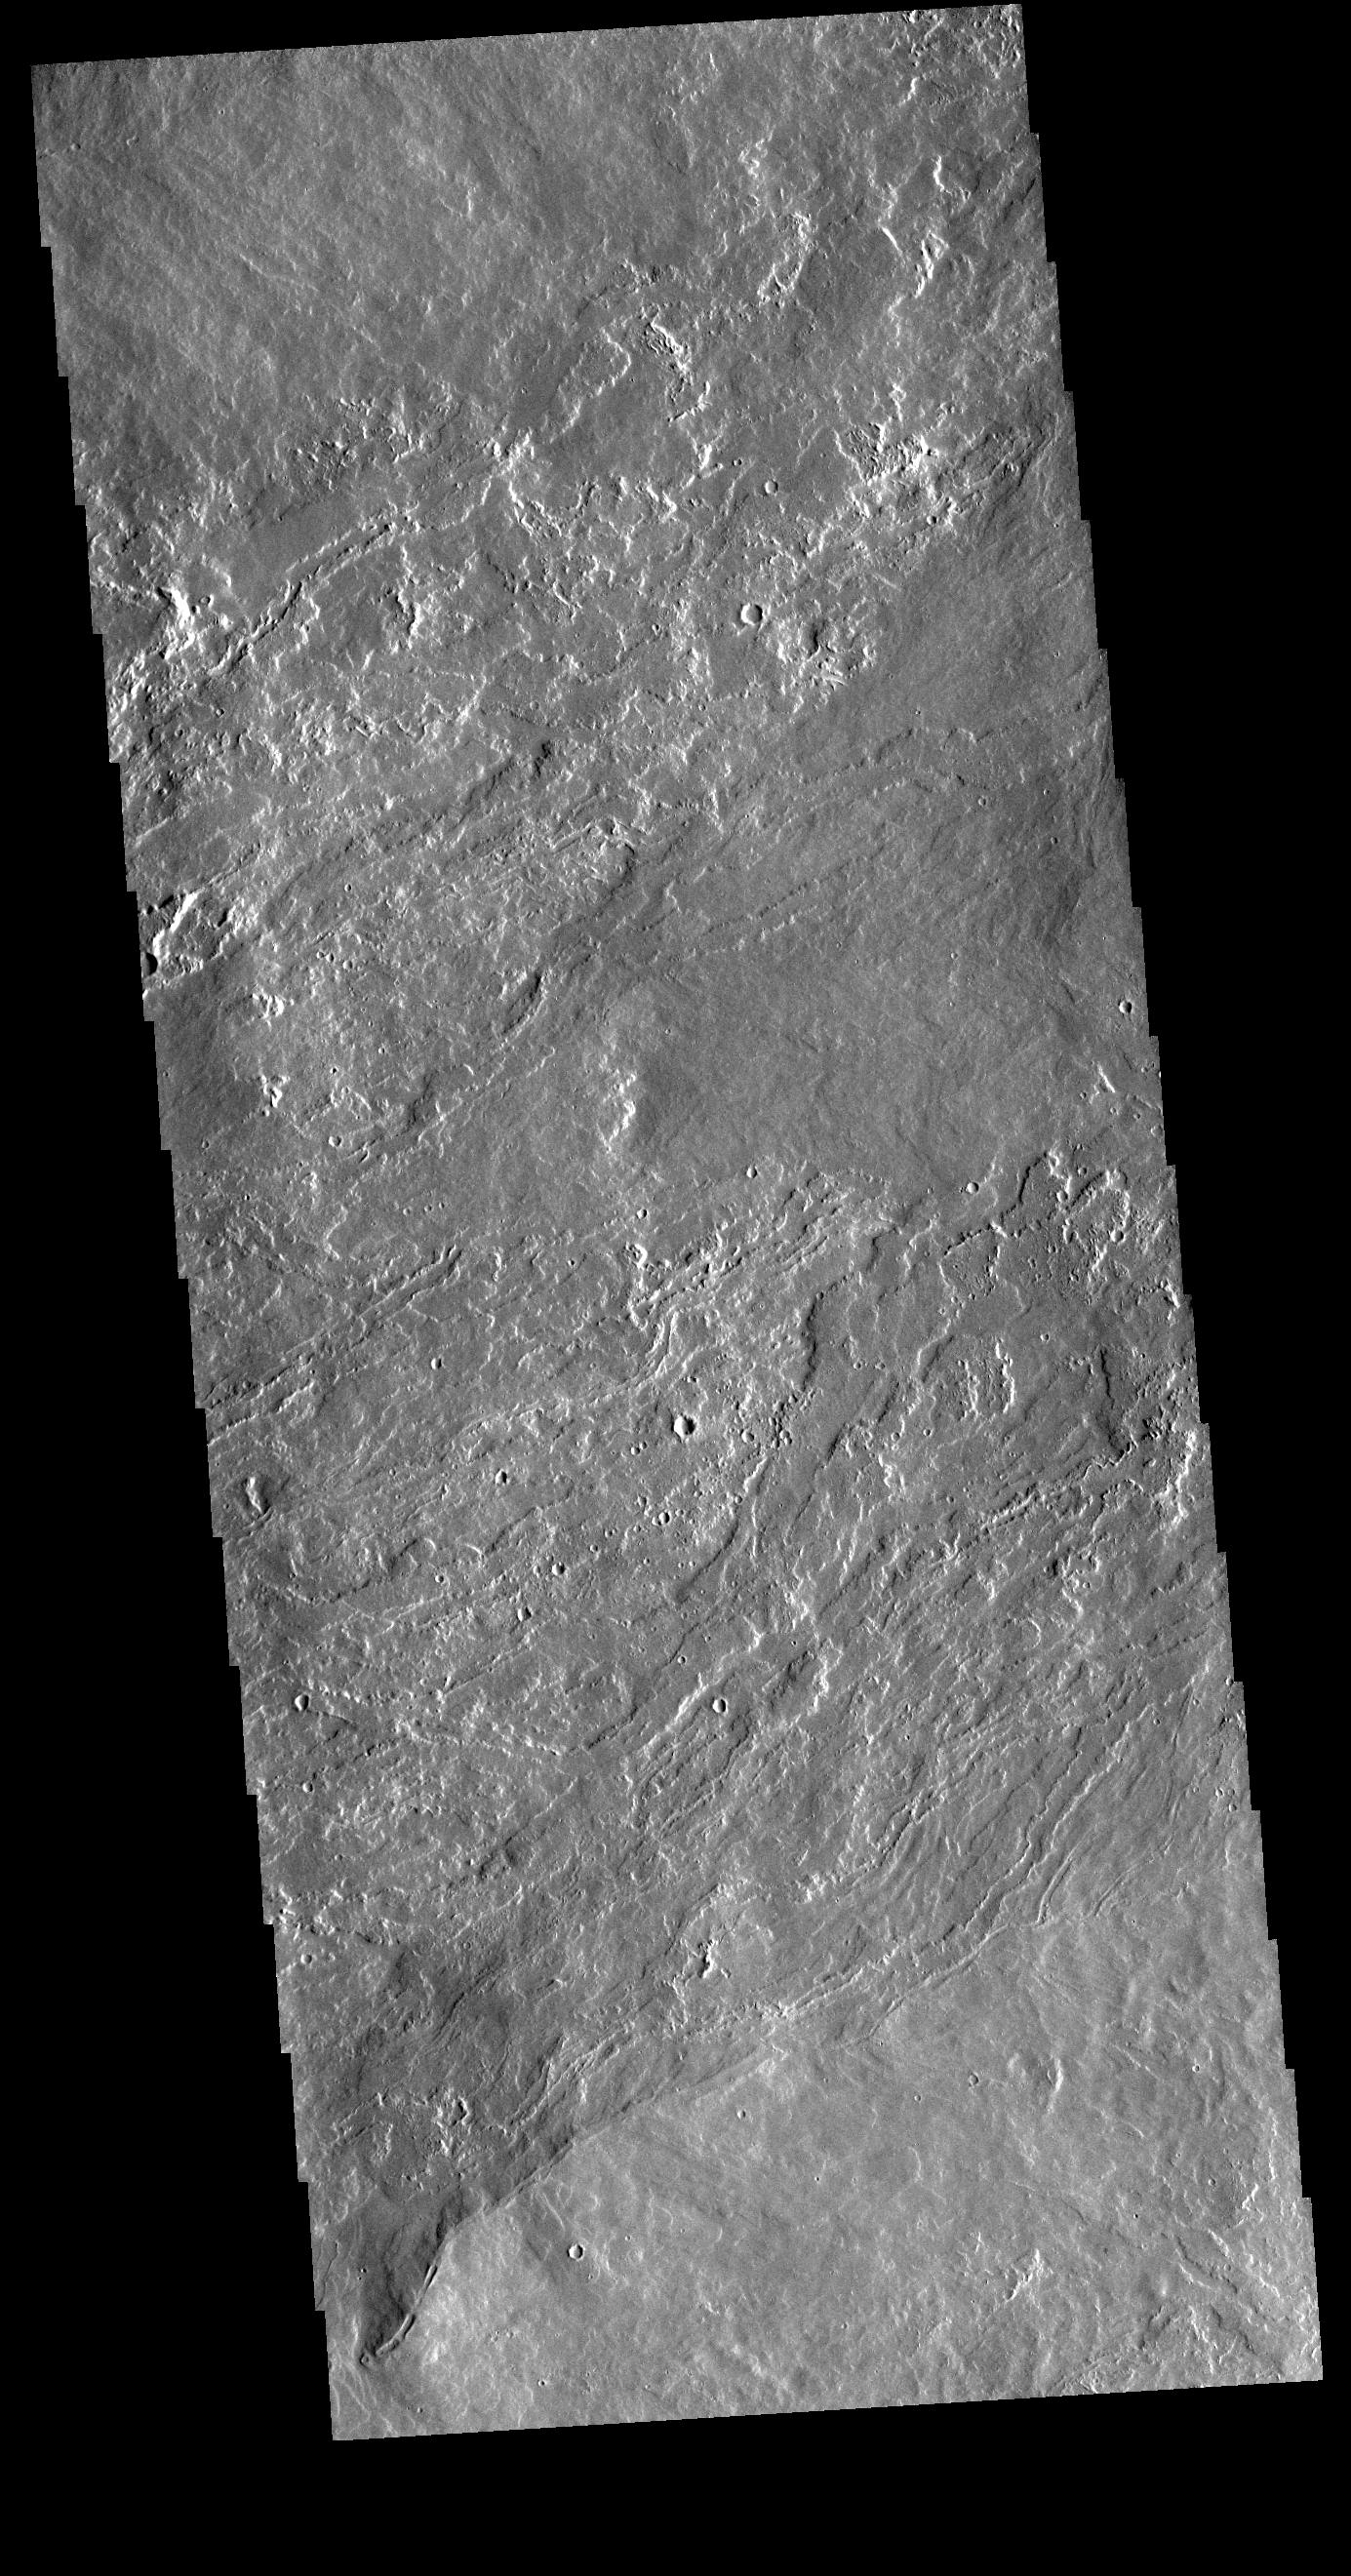 PIA22581: Olympus Mons